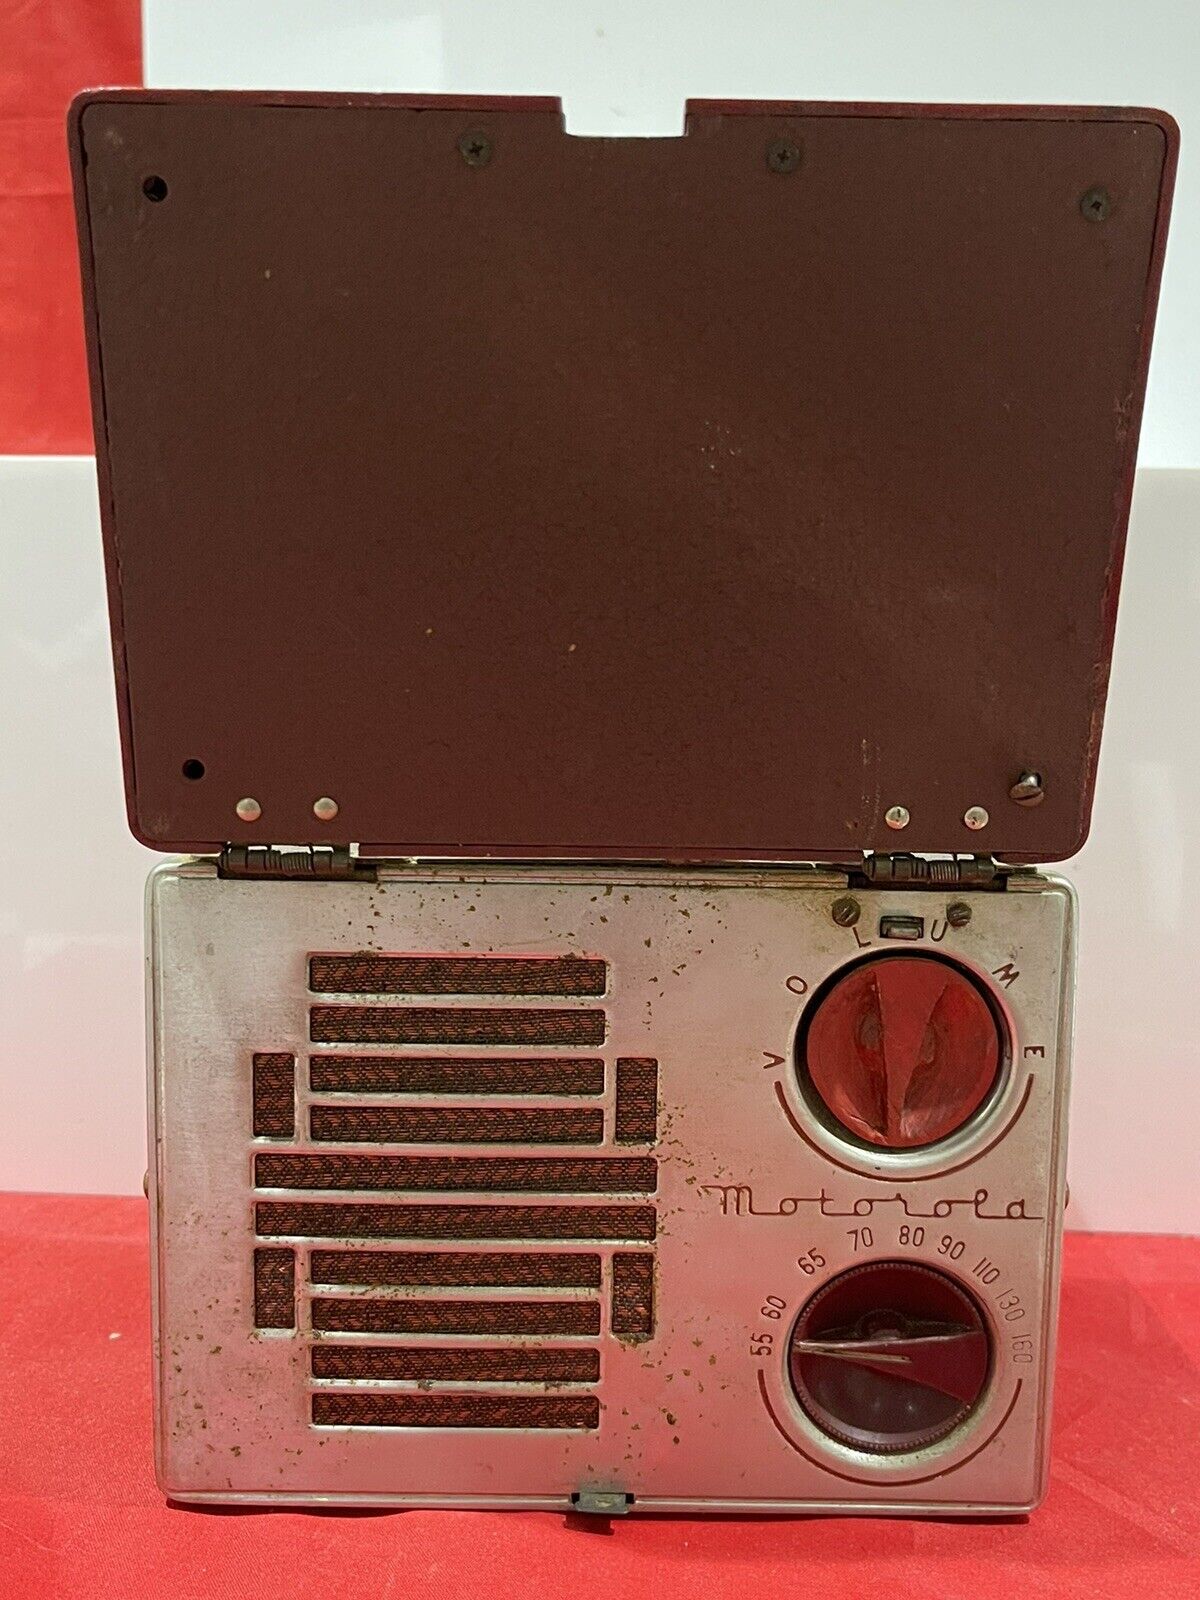 VINTAGE Motorola 1946 Lunch Box Radio, Model 5A5 Antique Portable - AS-IS PARTS